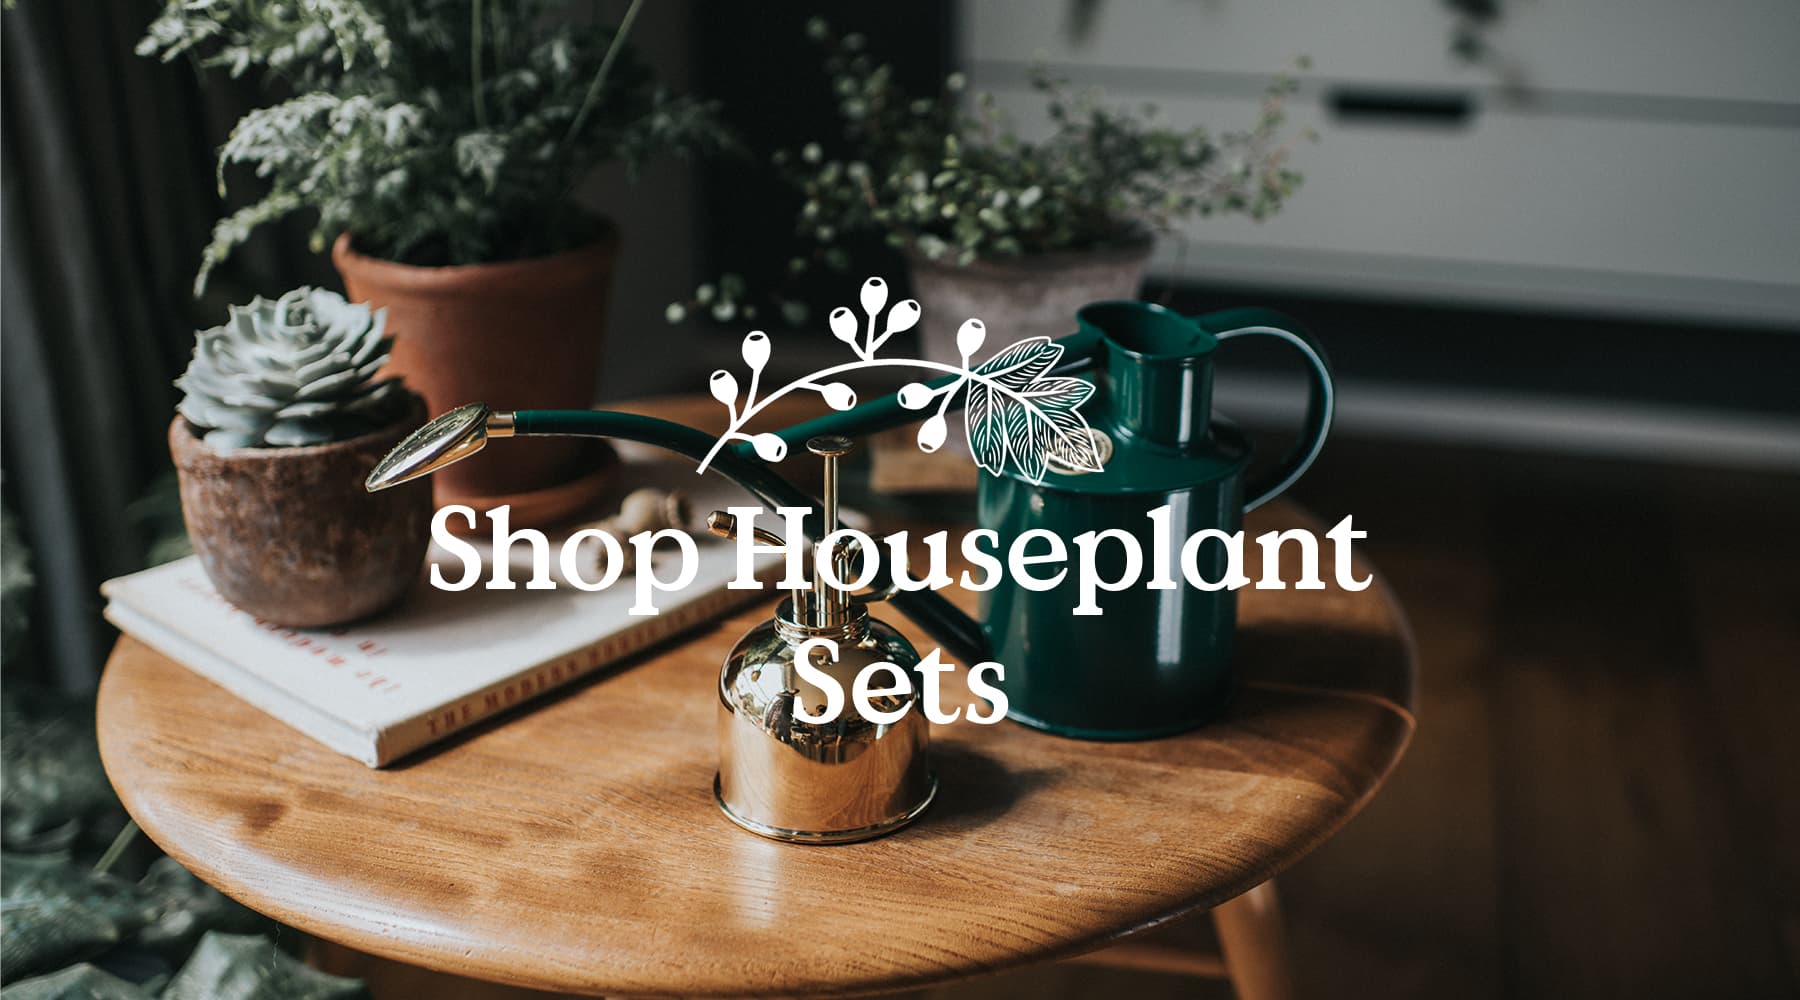 Houseplant sets